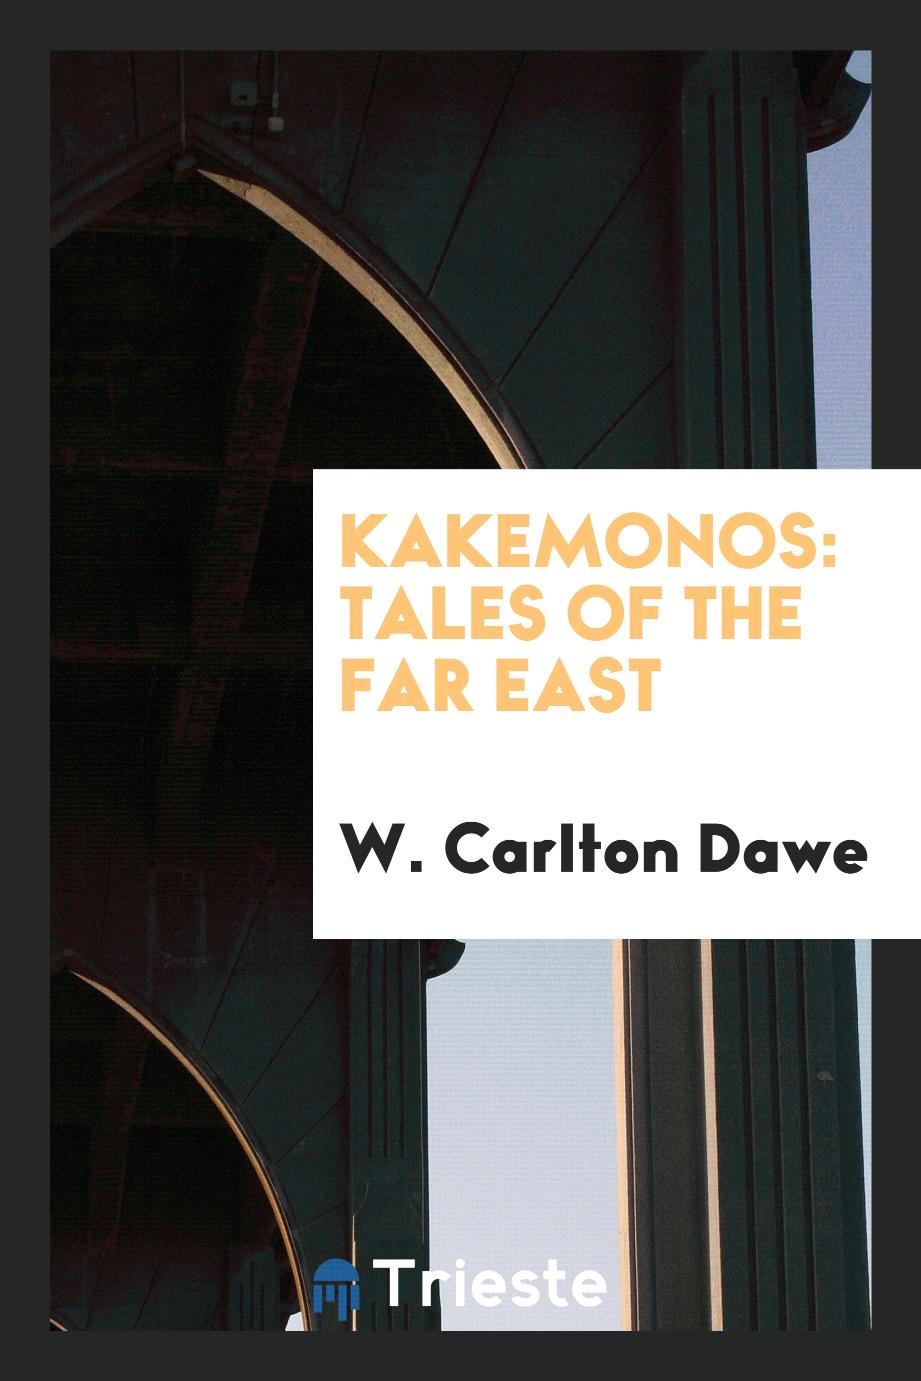 Kakemonos: tales of the Far East